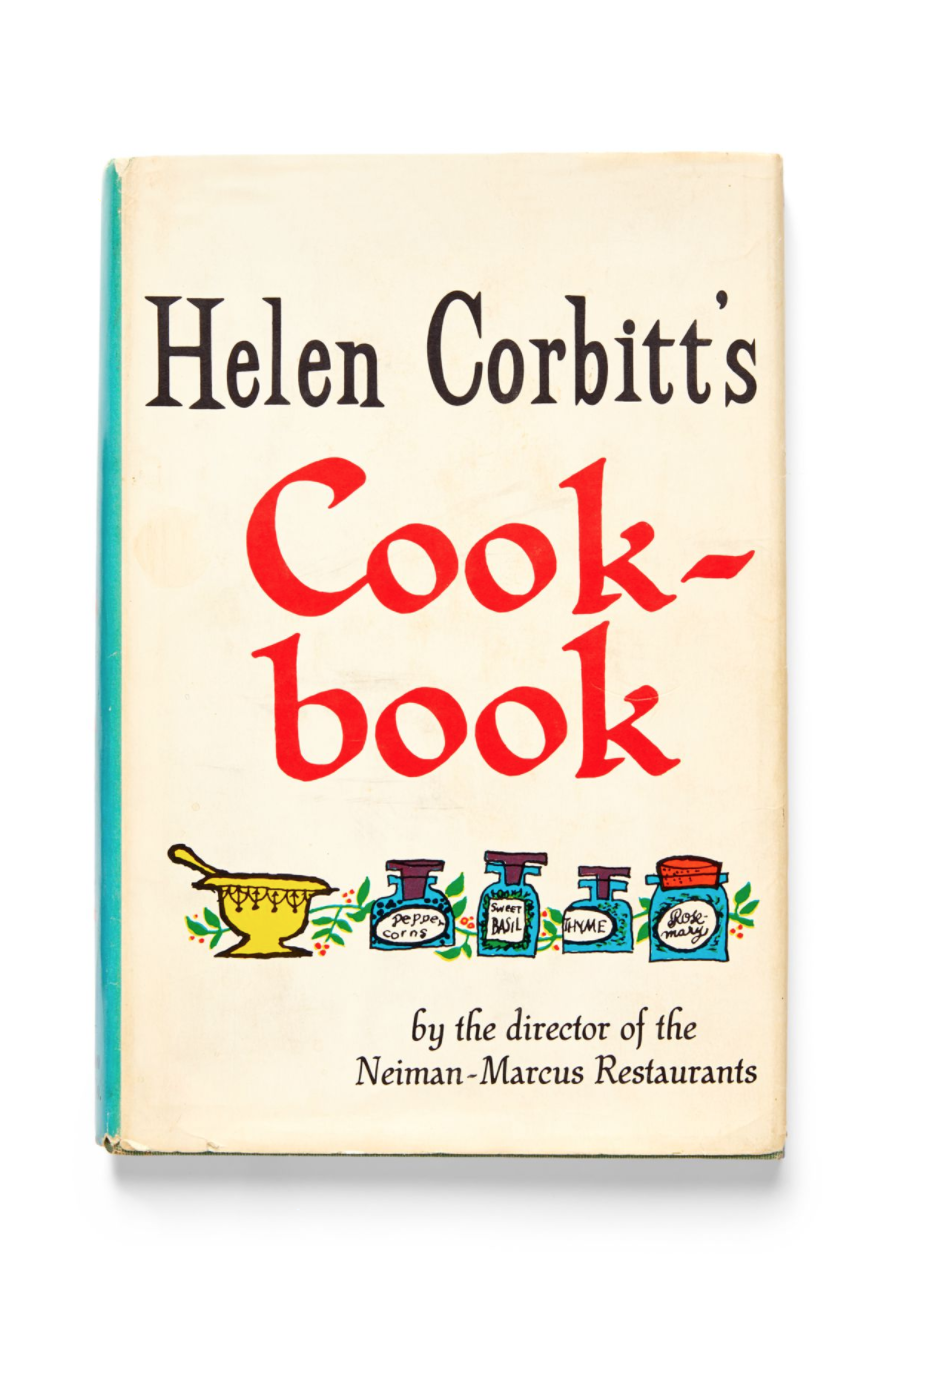 'Helen Corbitt's Cookbook' by Helen Corbitt